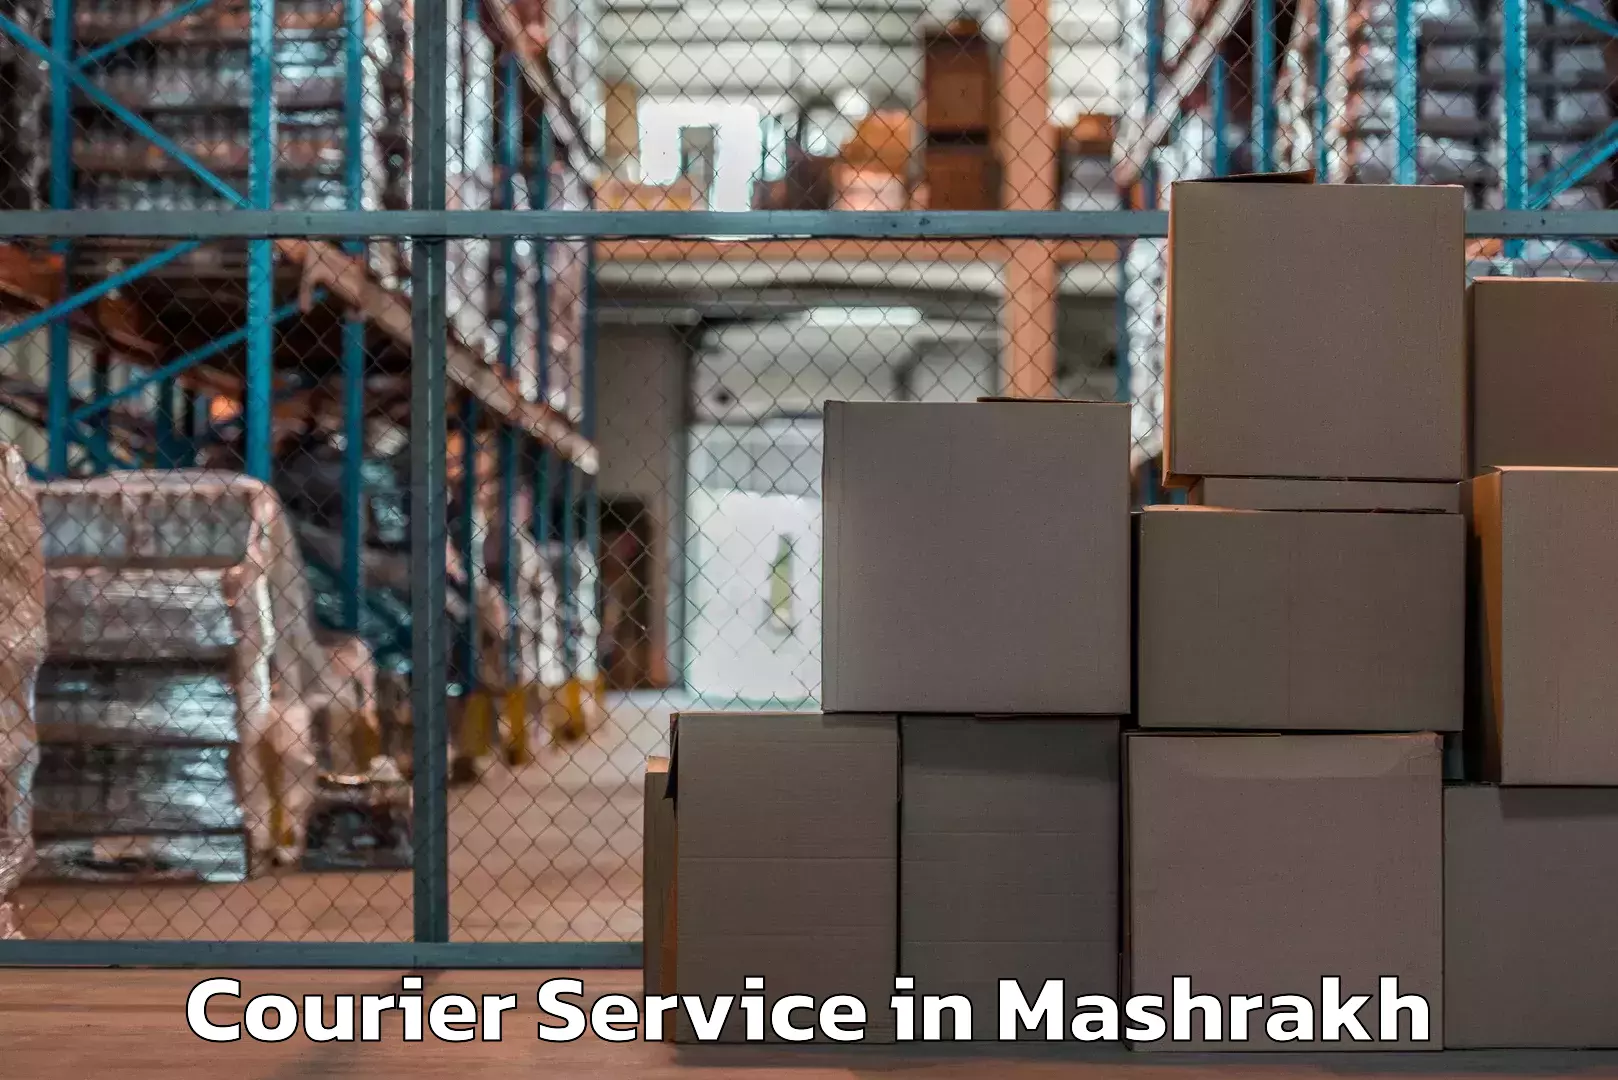 Supply chain delivery in Mashrakh